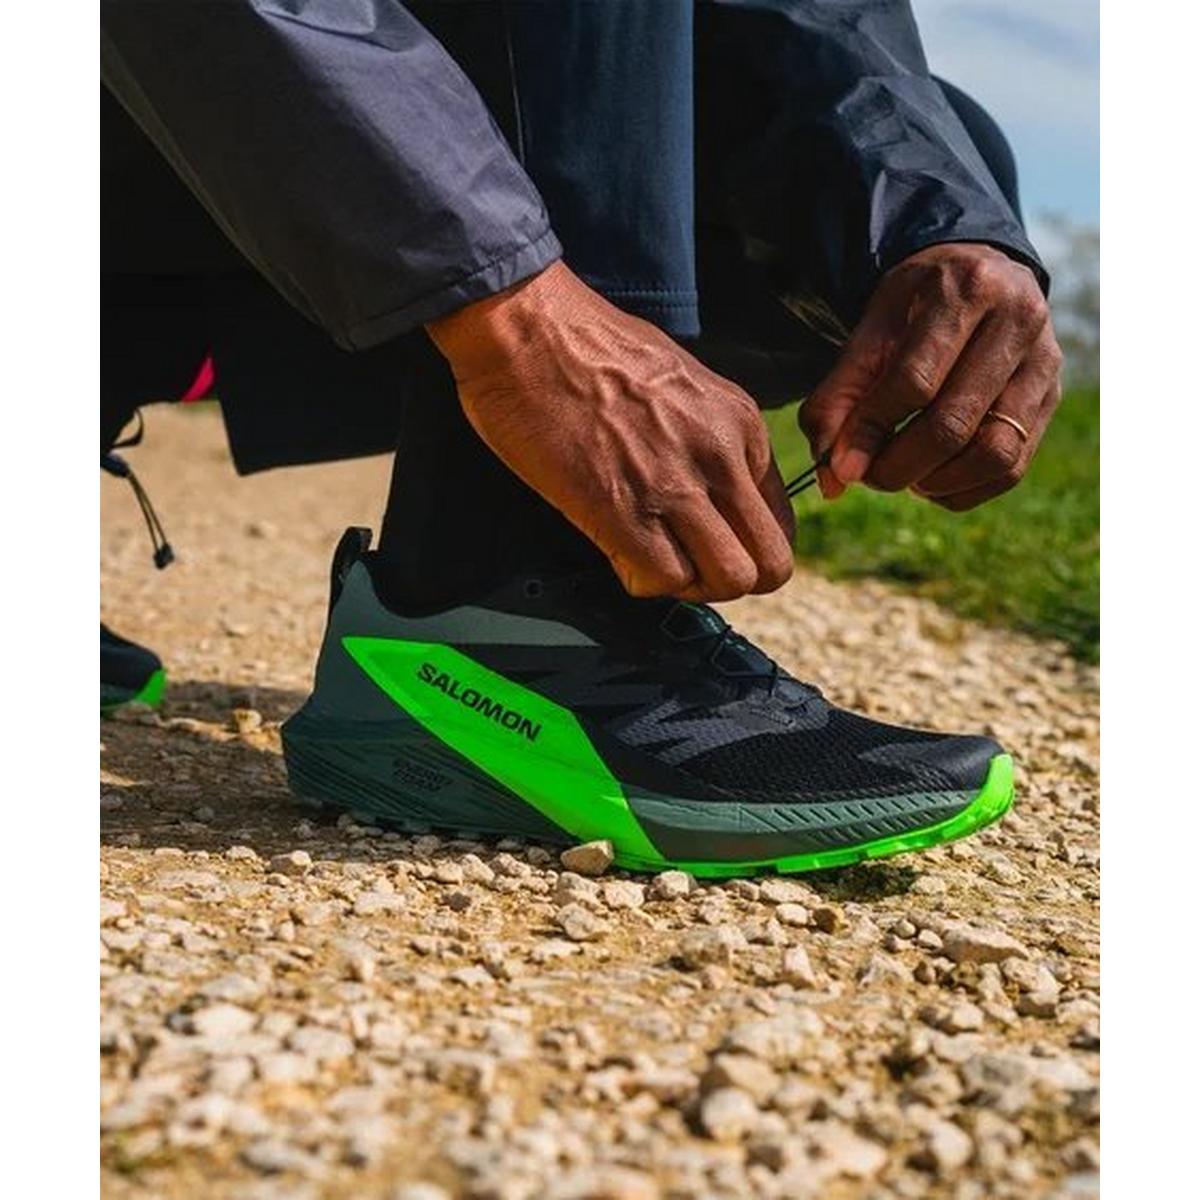 Salomon Men's Sense Ride 5 GORE-TEX Trail Running Shoes - Green